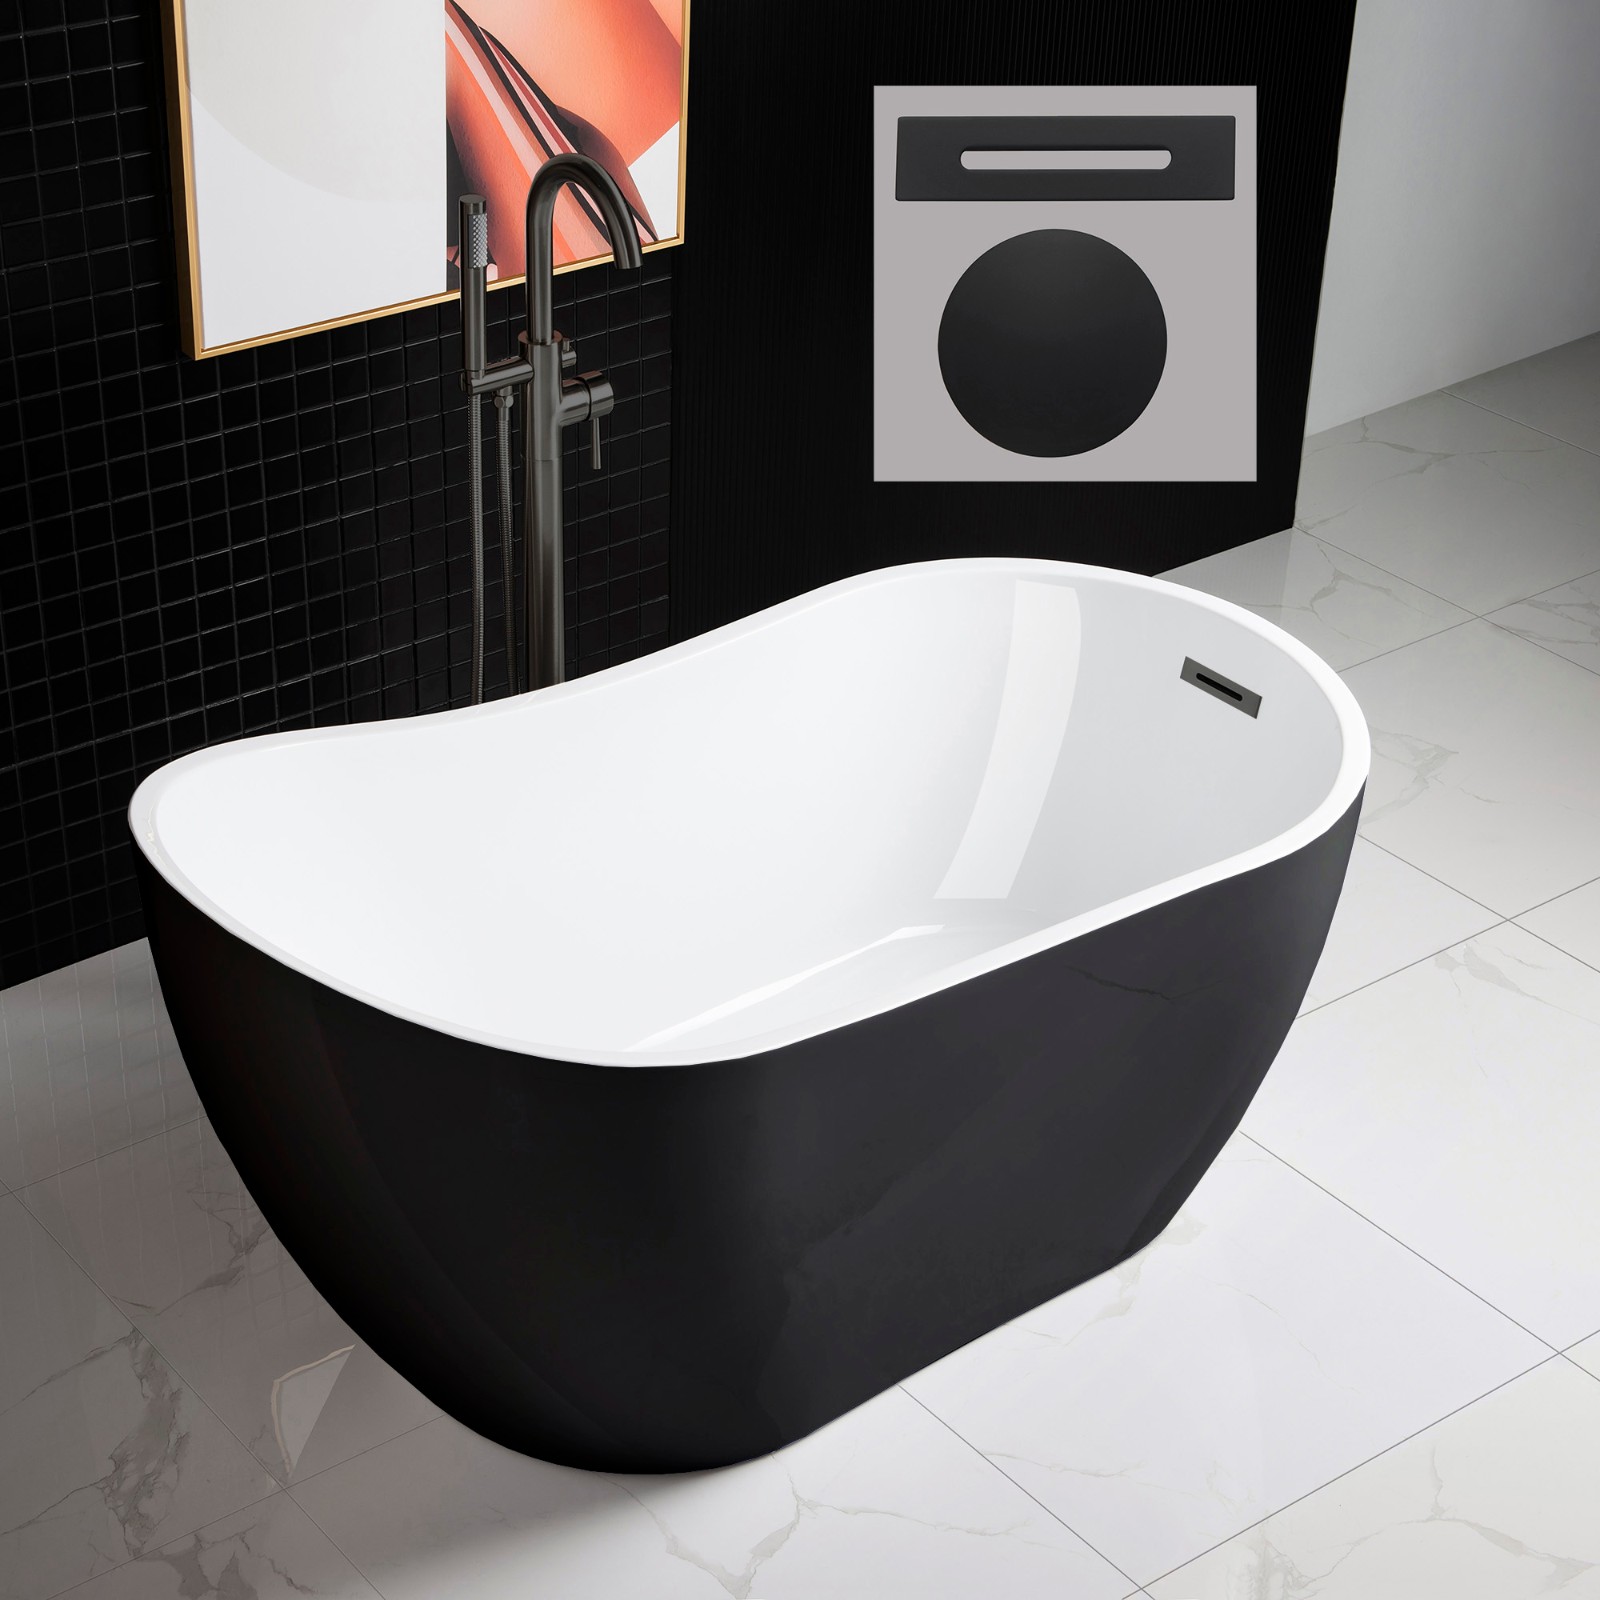  WOODBRIDGE B-1807 Acrylic Freestanding Contemporary Soaking Tub with Matte Black Overflow and Drain BTA1807-MB, 54